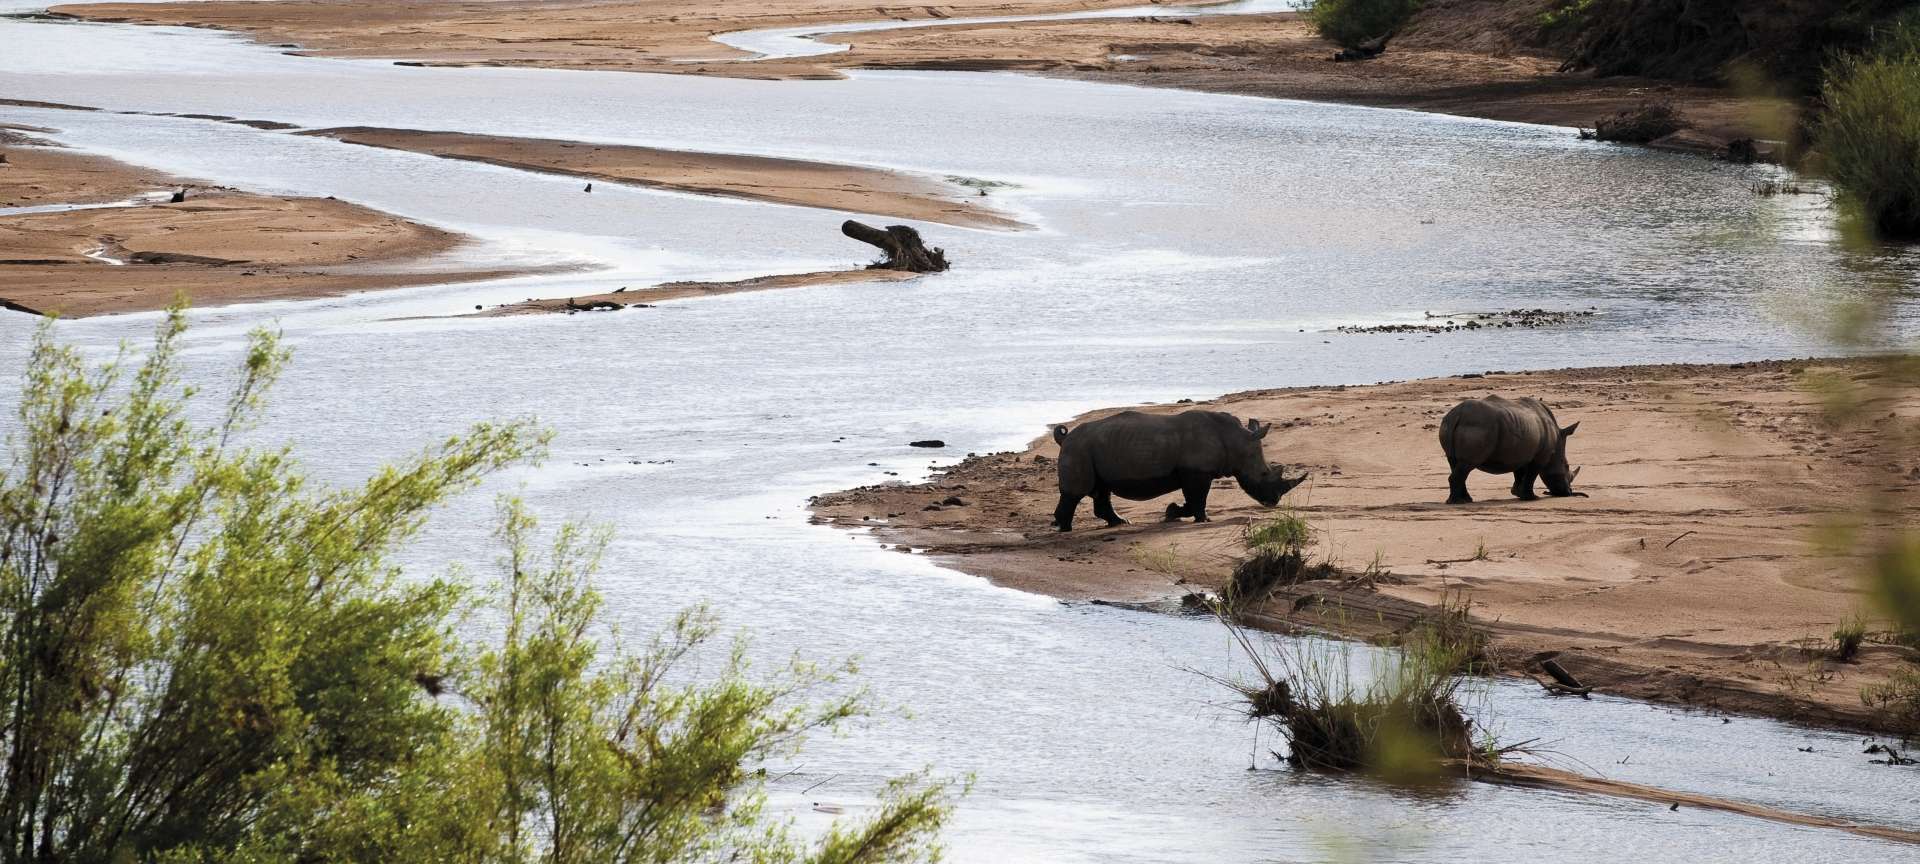 Rhino along the banks of the Khwai River